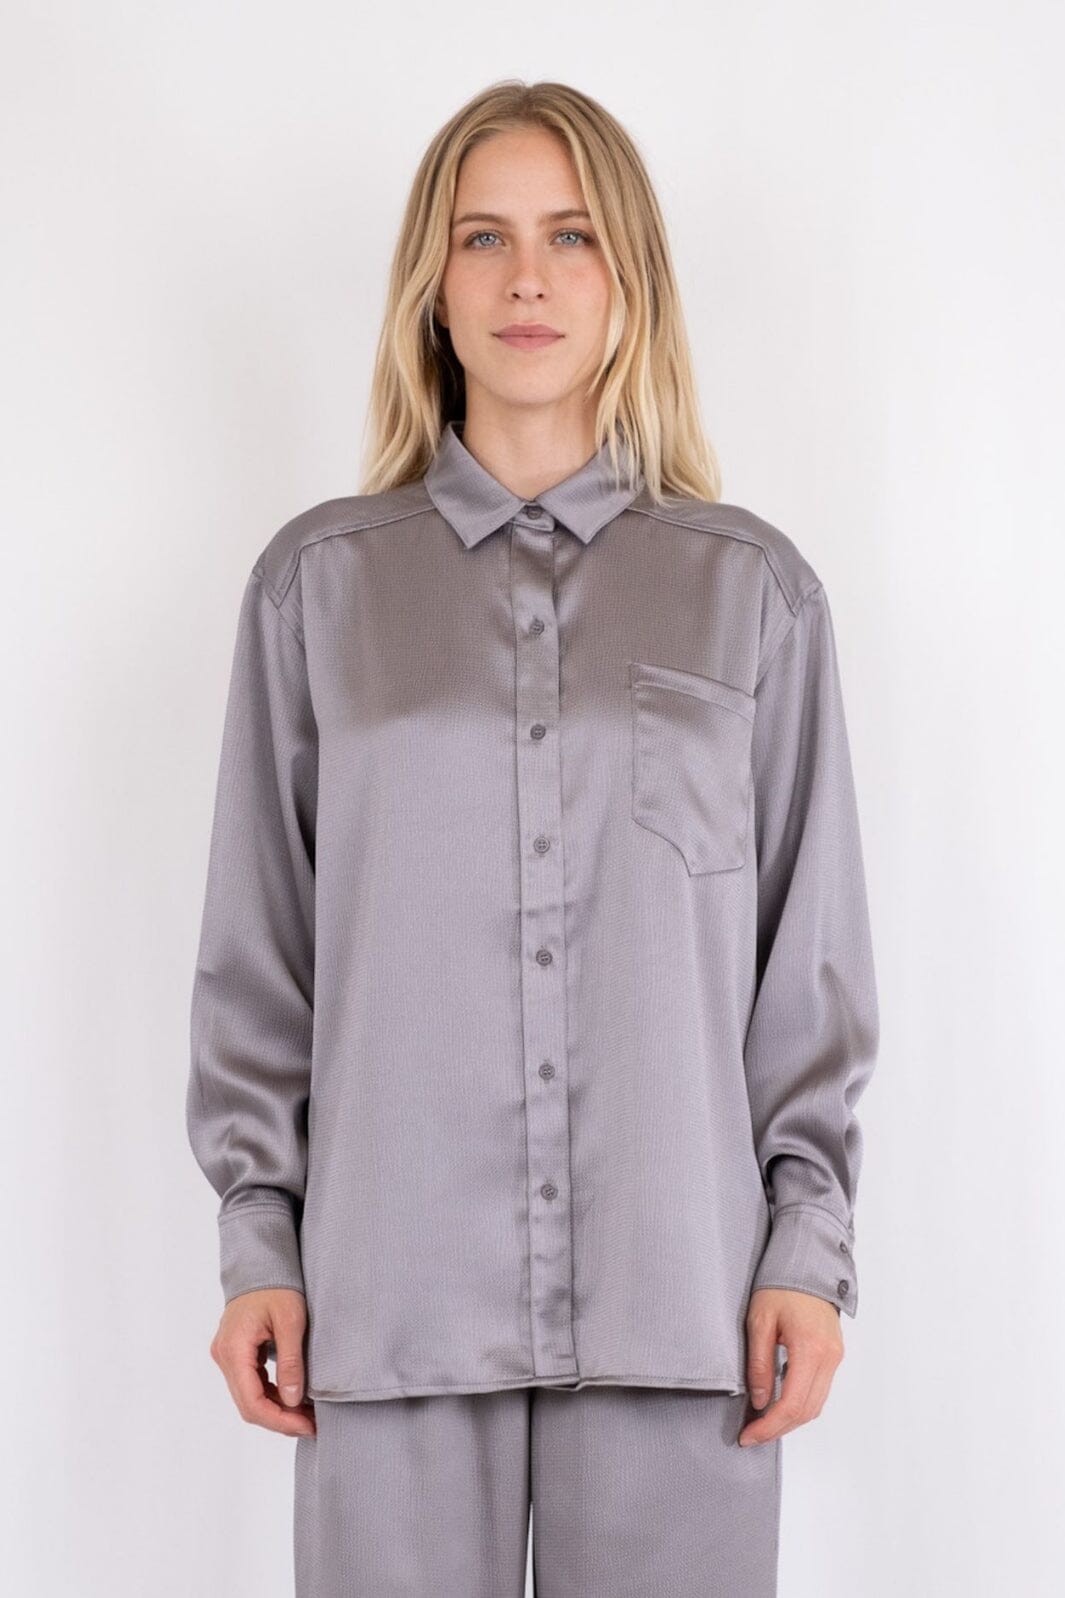 Neo Noir - Dalma Crepe Satin Shirt - Grey Skjorter 